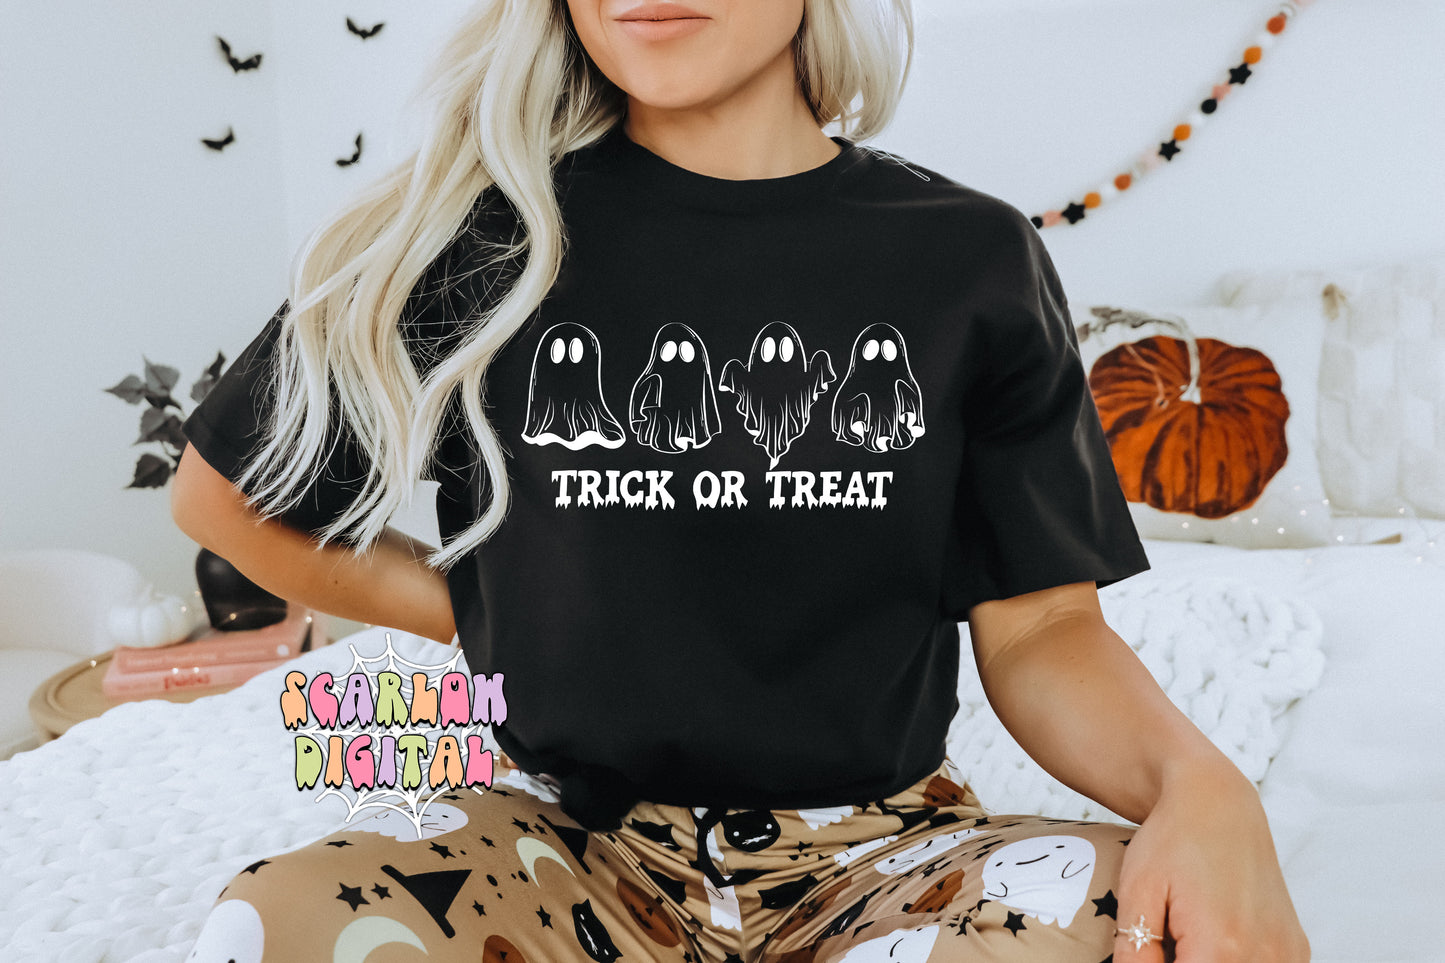 Trick or Treat SVG-Halloween Cut File Digital Design Download-spooky season svg, ghost svg, boho ghost svg, retro svg, vintage halloween svg